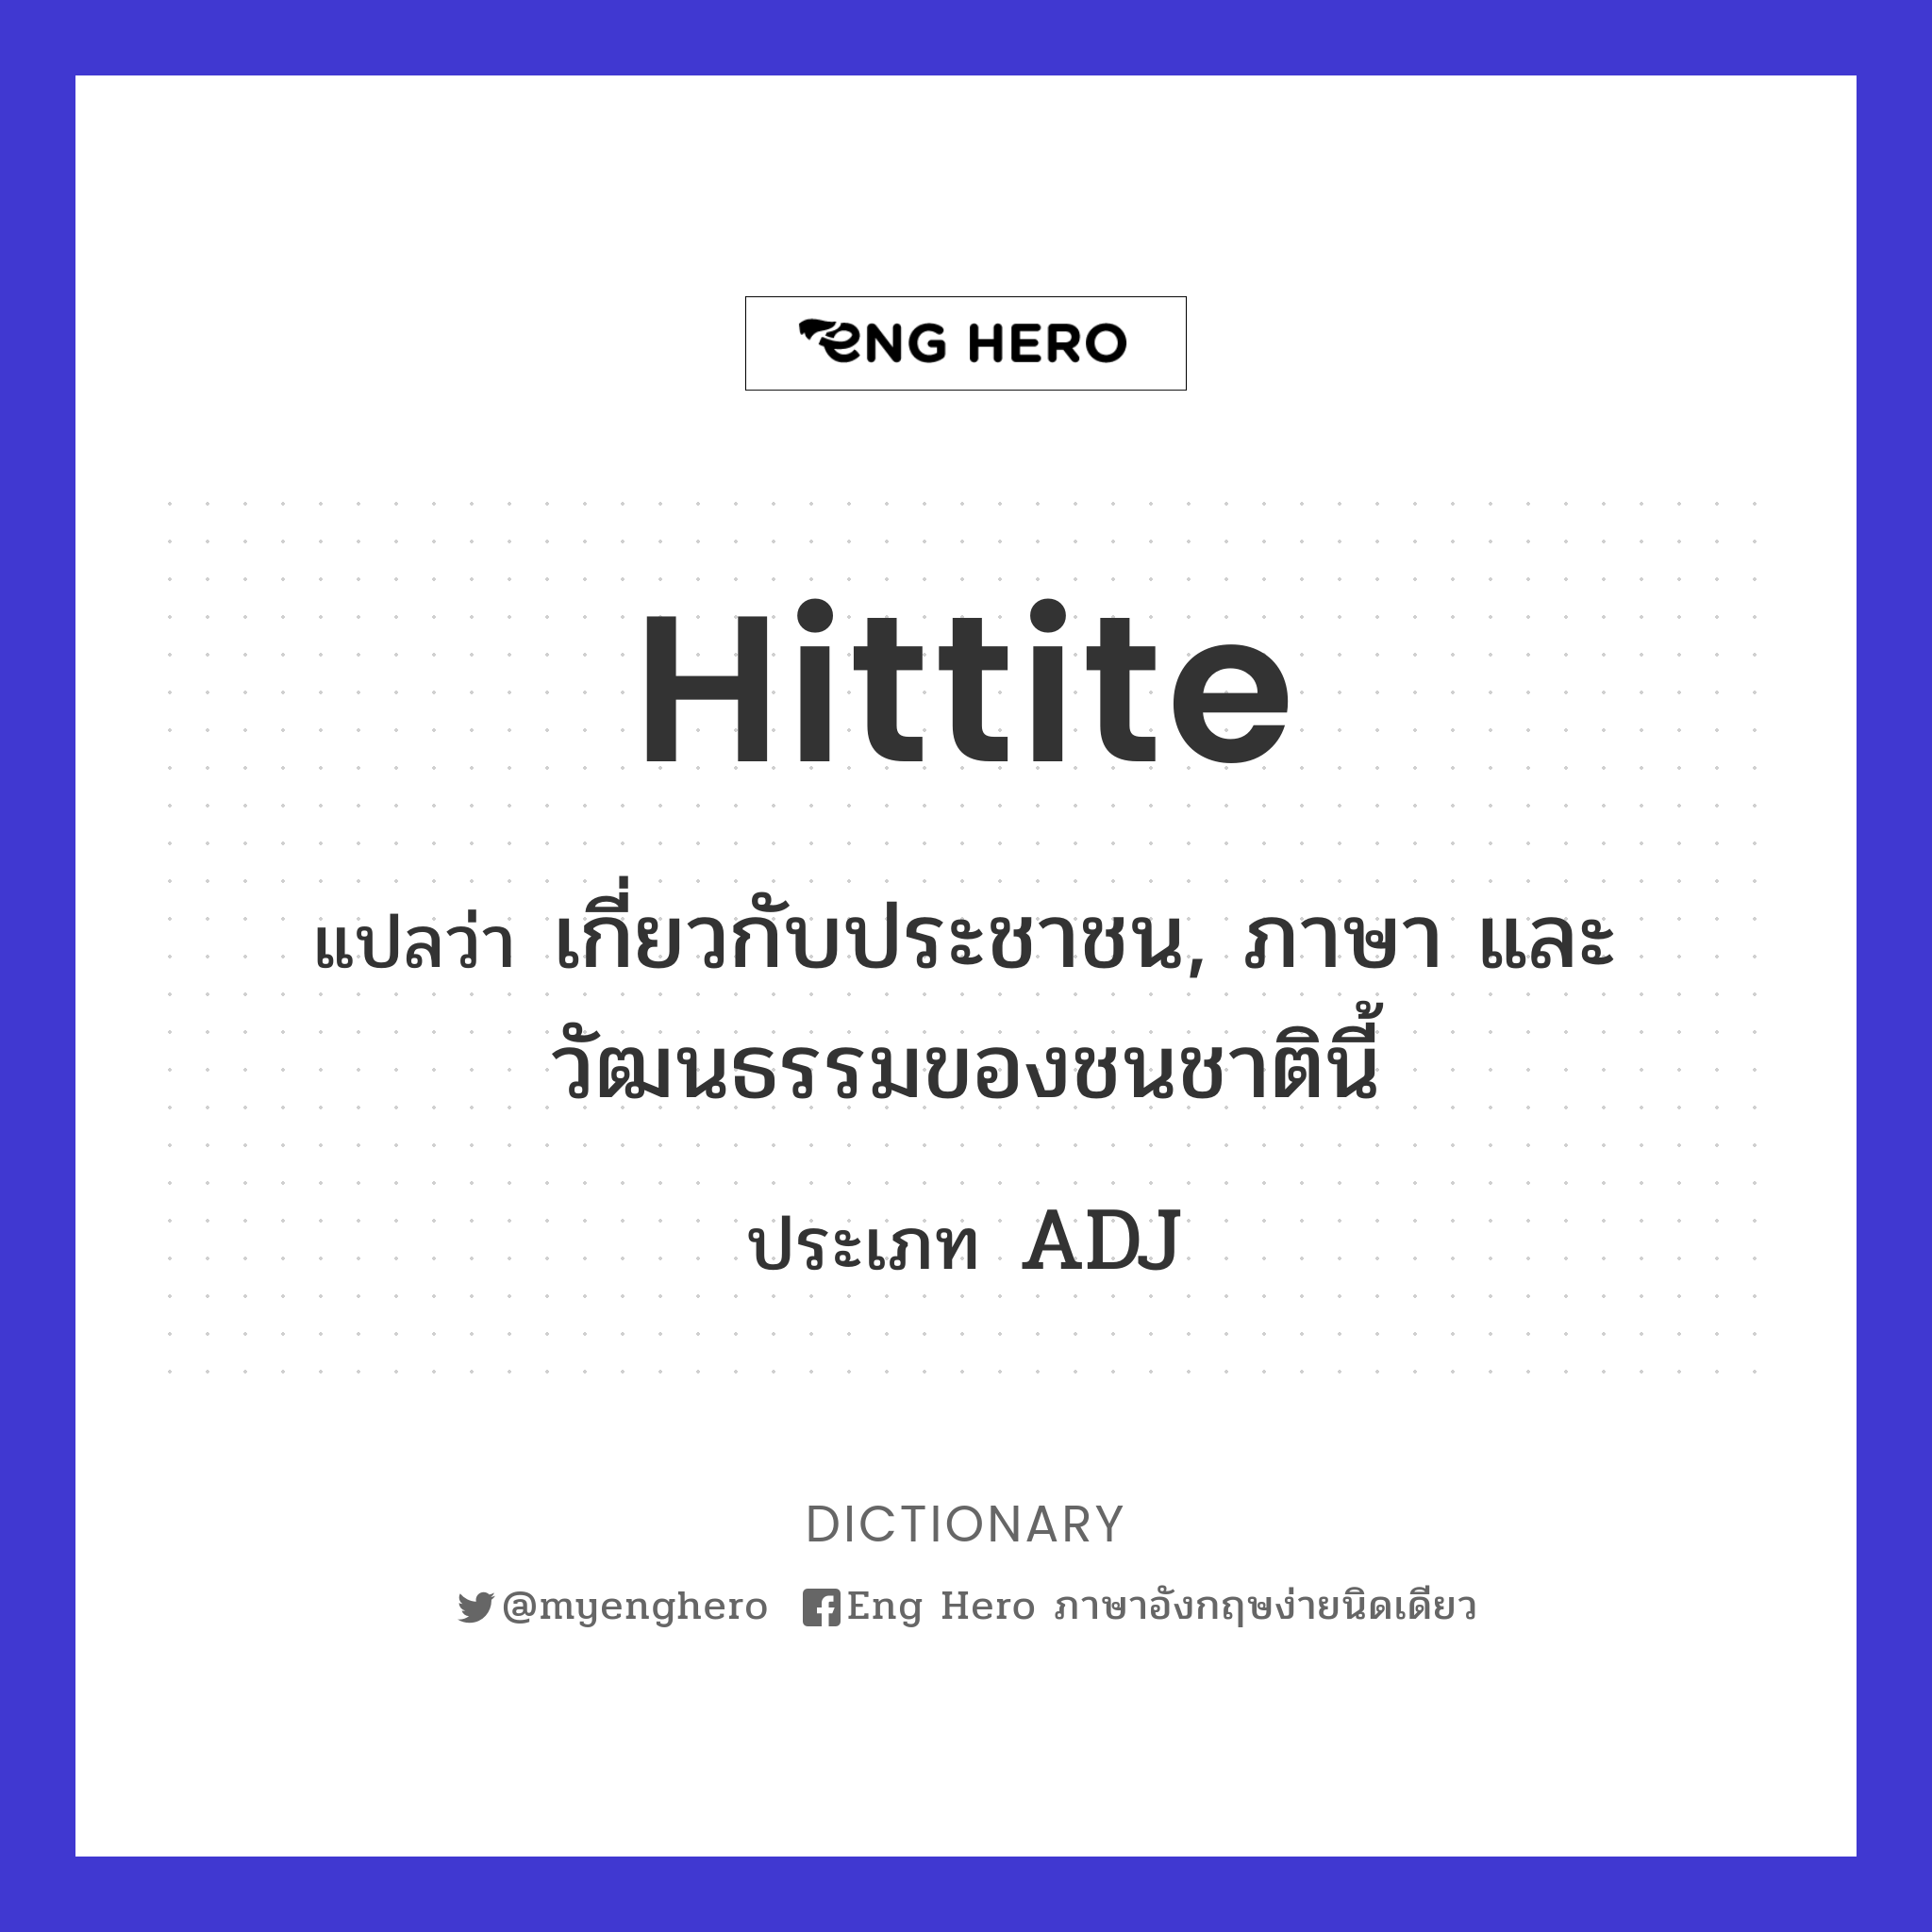 Hittite